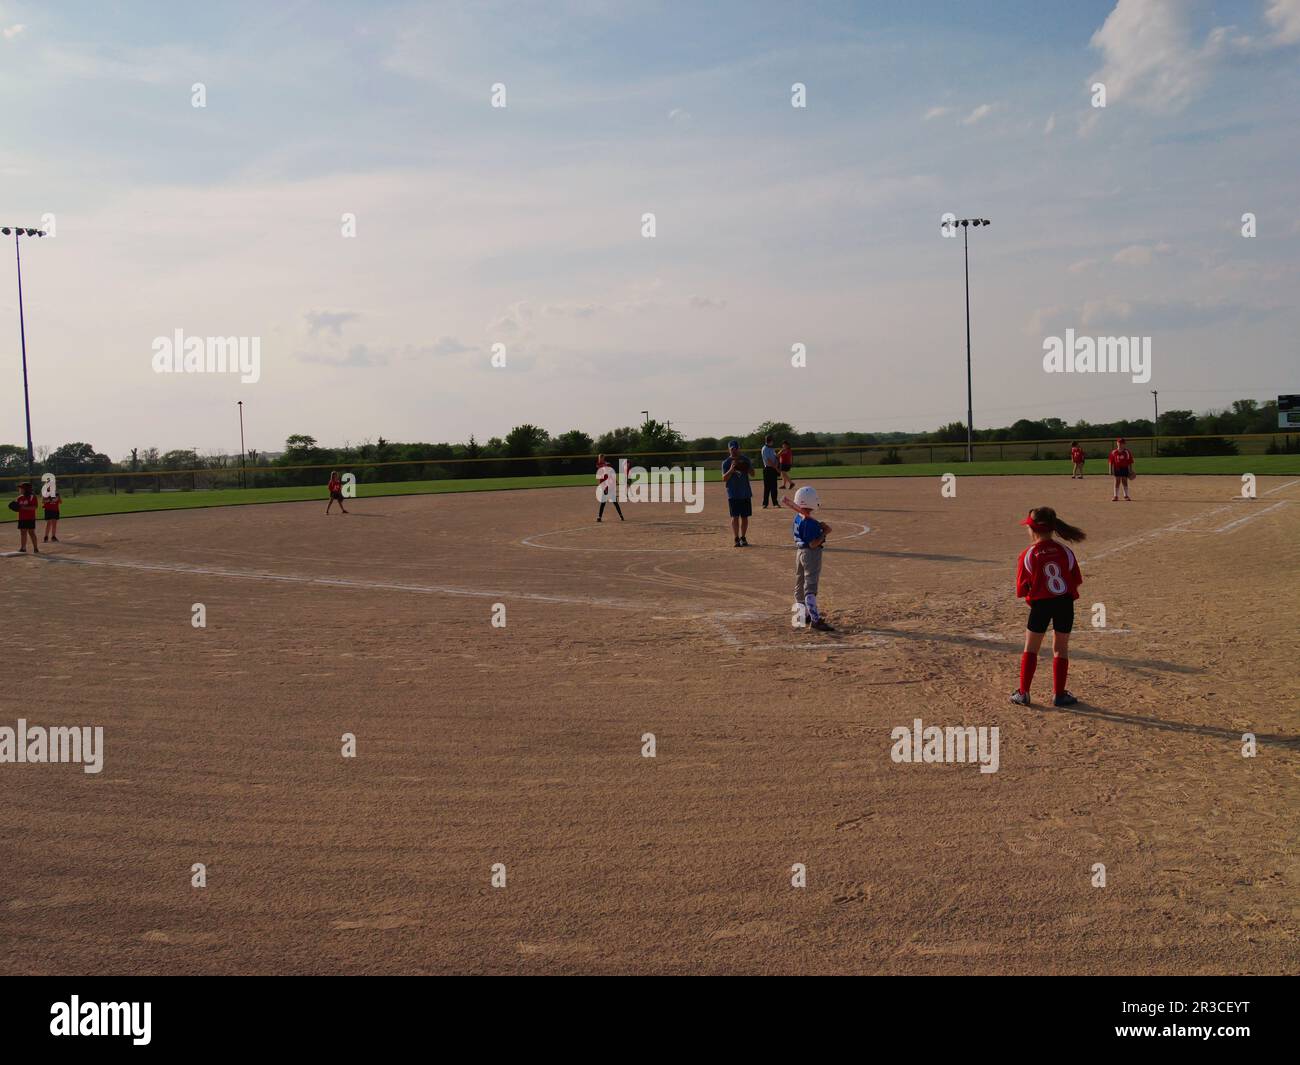 Girls Softball at a Local Park Baseball Field Stock Photo